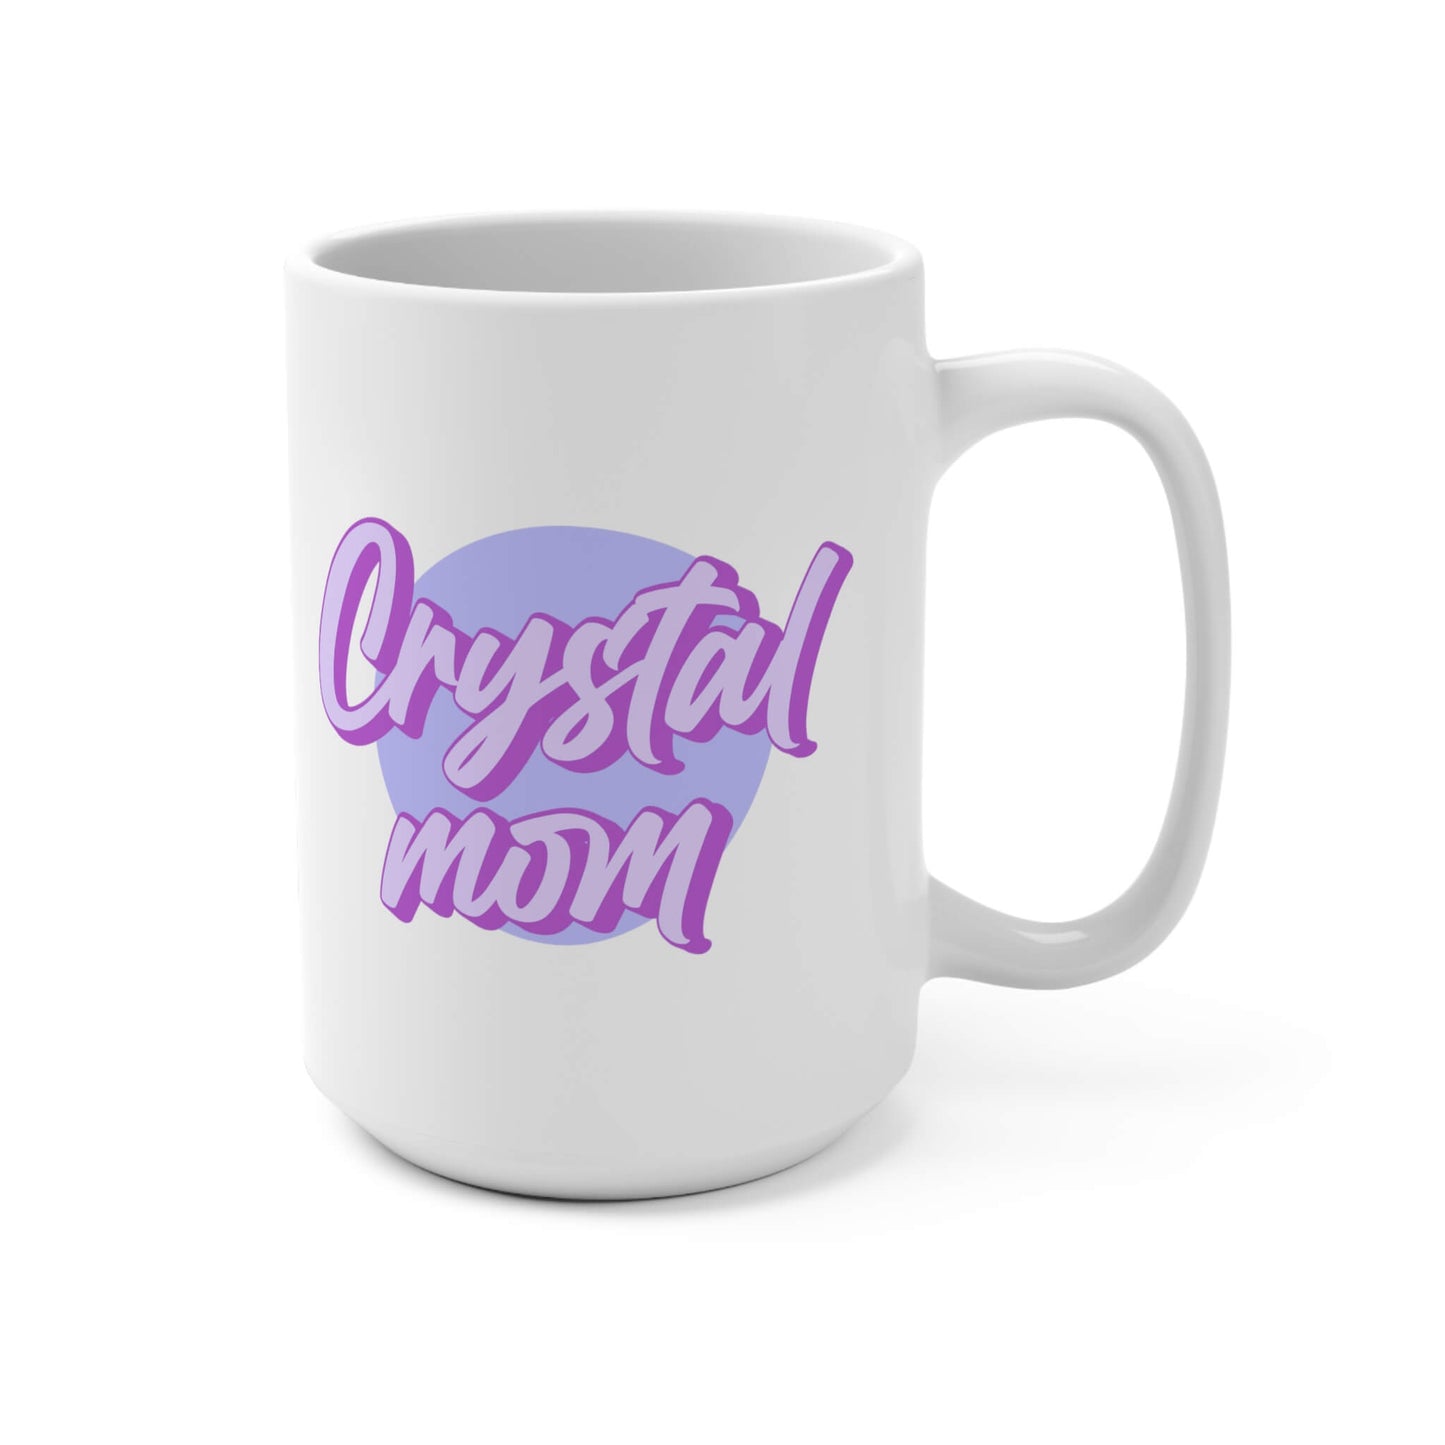 Crystal mom mug